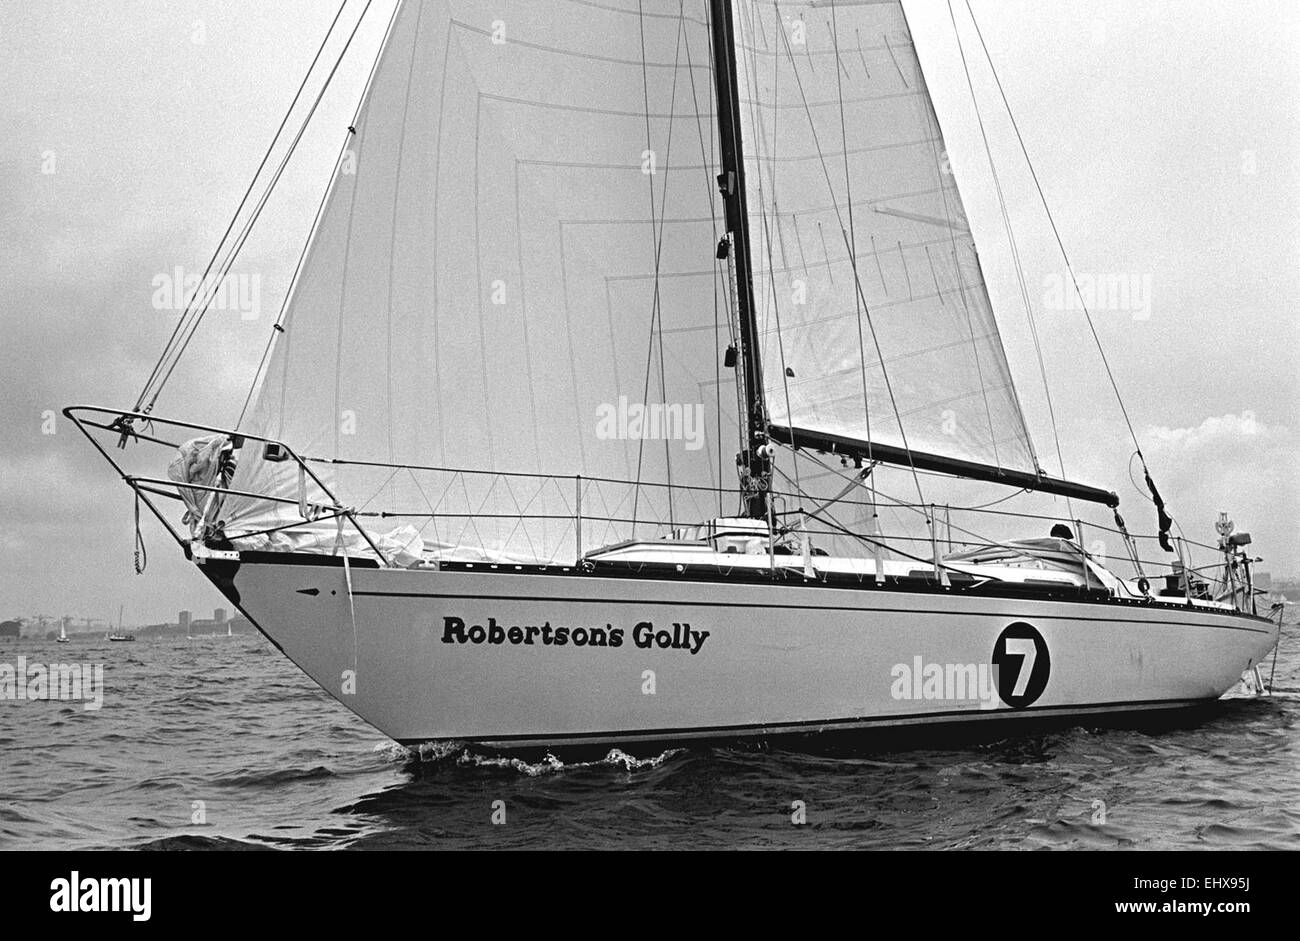 robertsons golly yacht